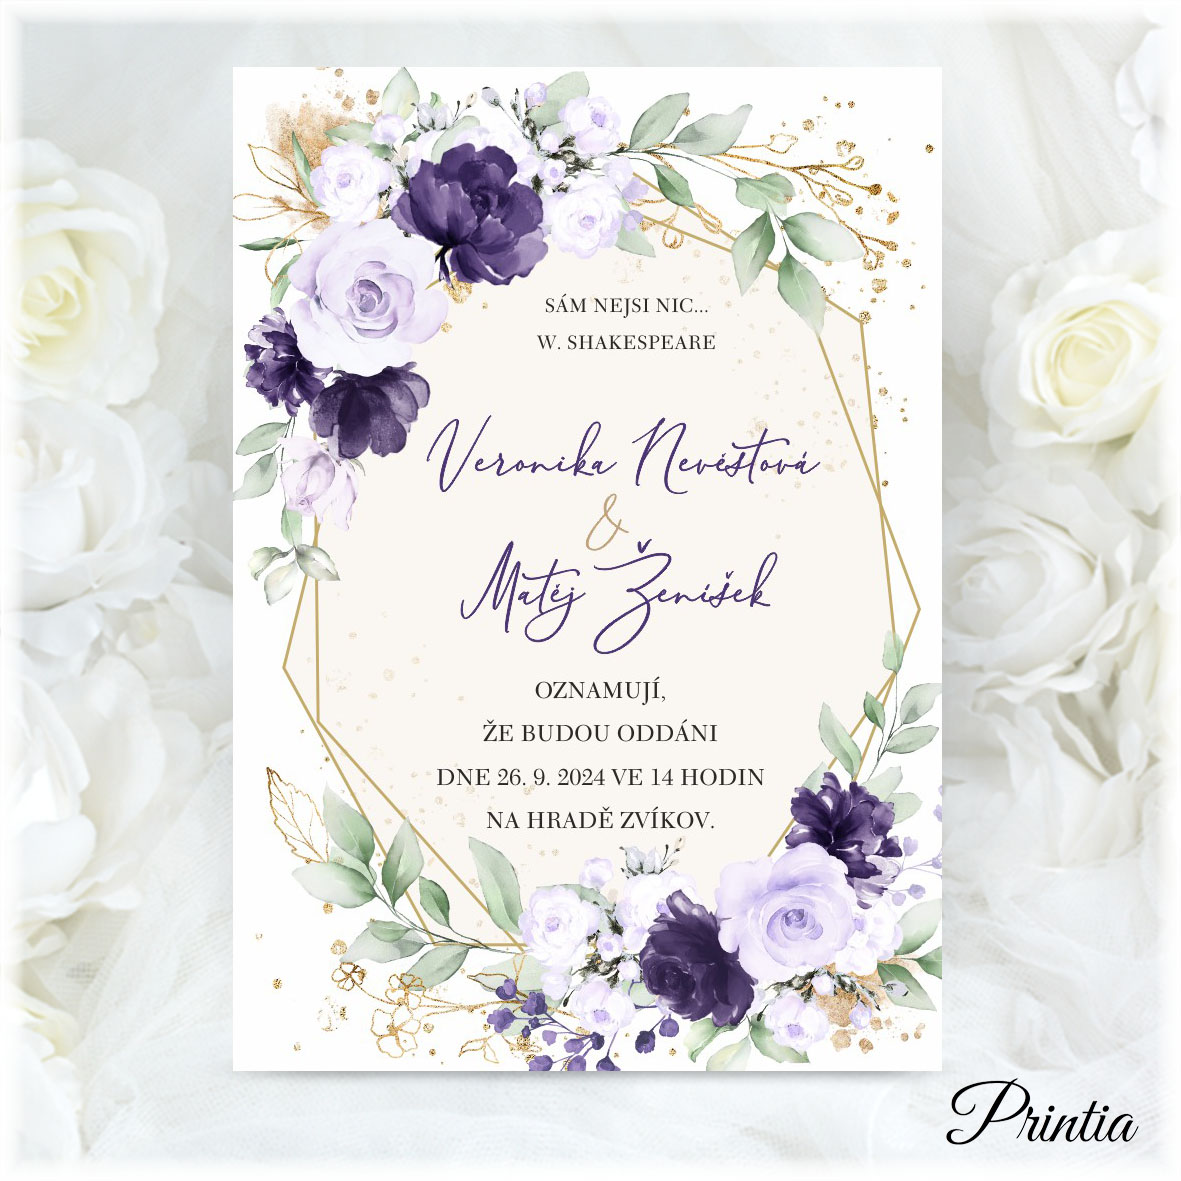 Wedding invitation with purple flowers